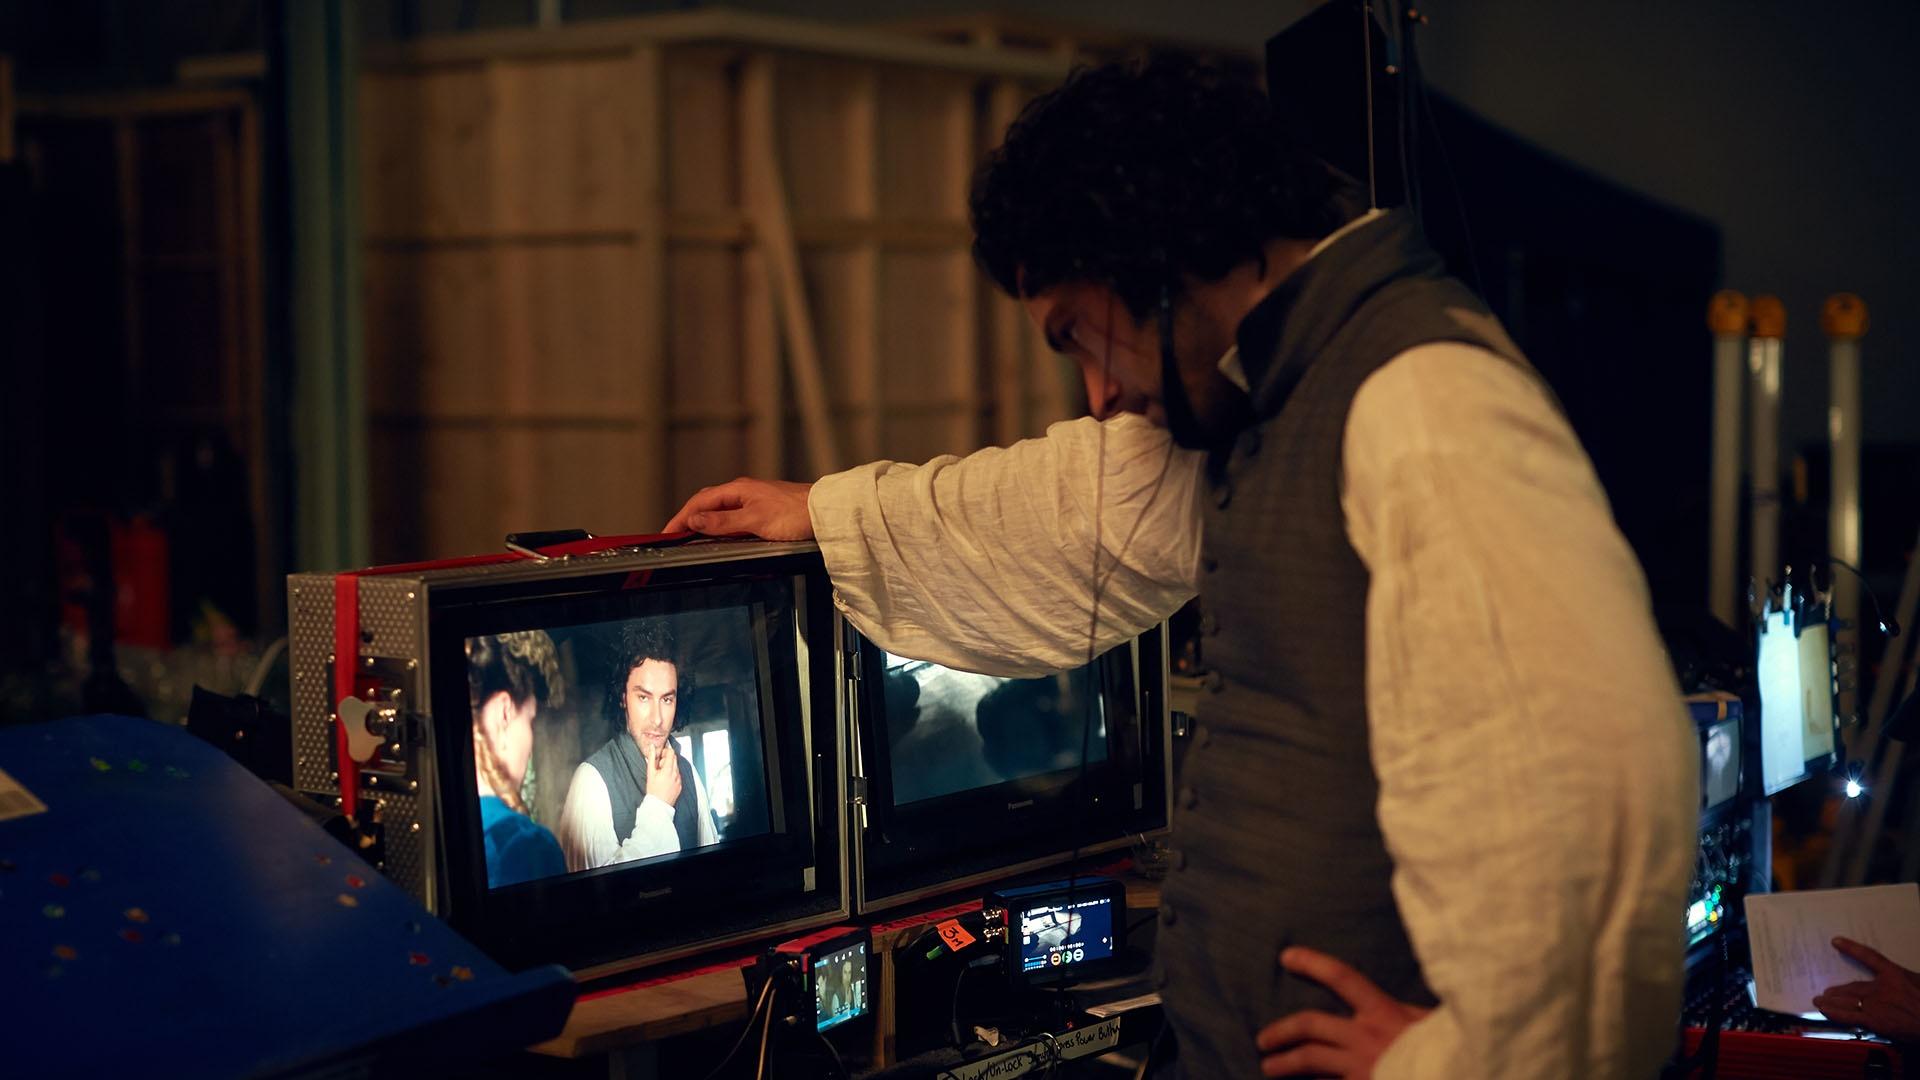 Aidan Turner (Ross Poldark) views his scene in playback on the monitor.